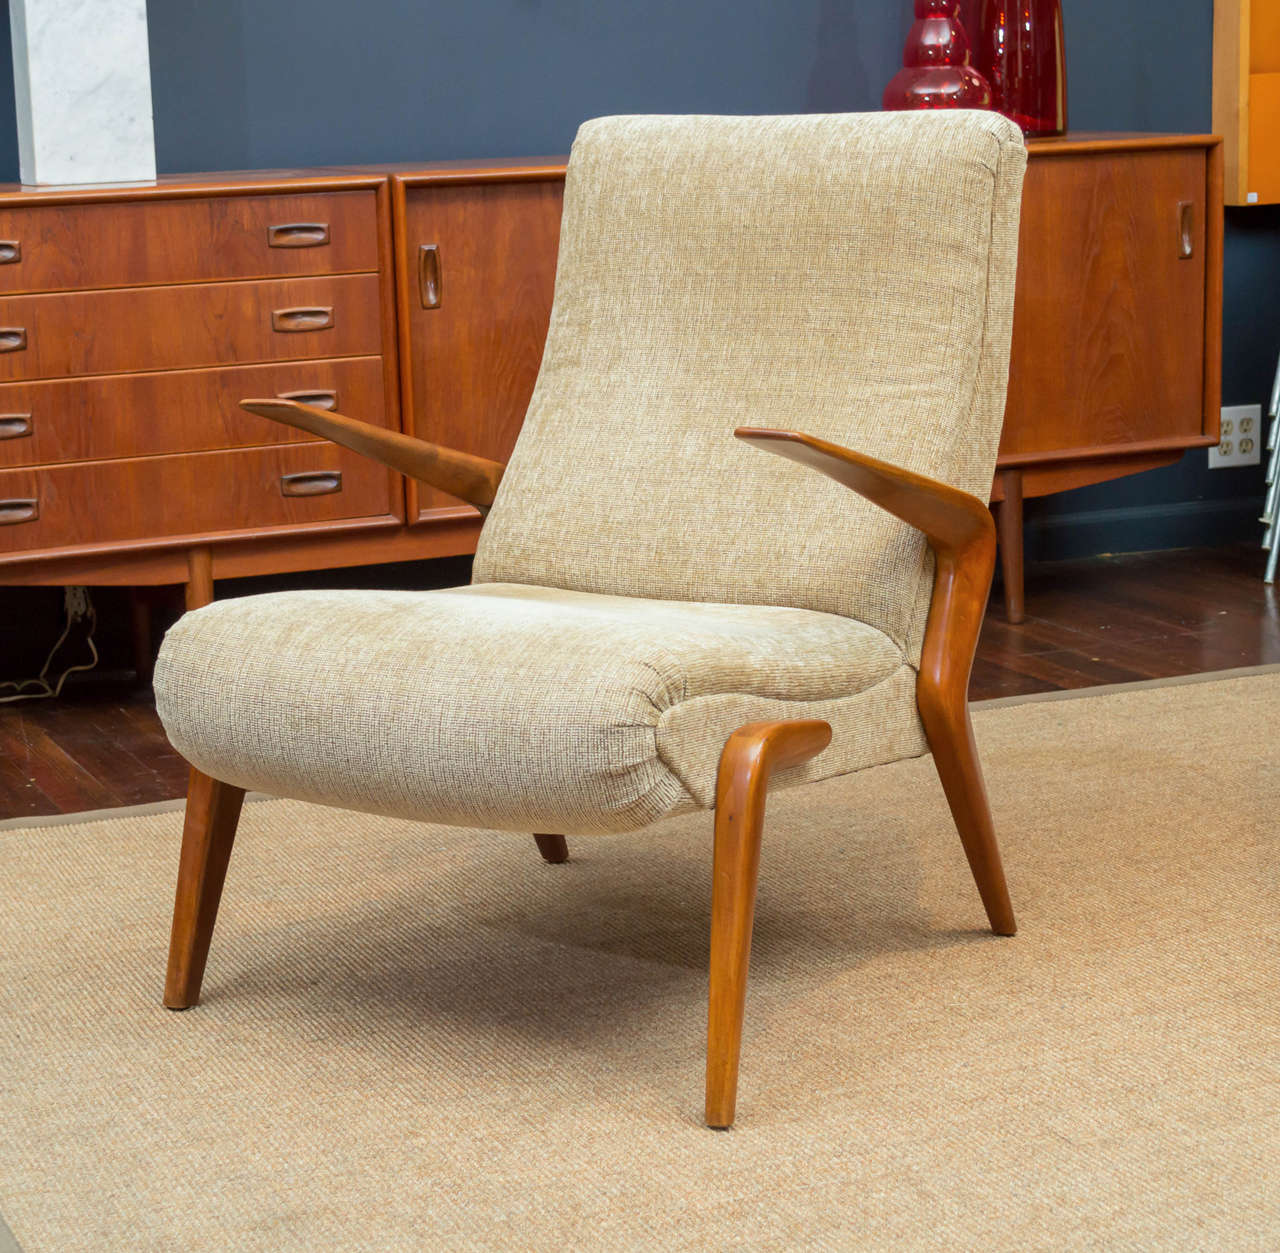 Osvaldo Borsani P71 lounge chair for Tecno, Italy 1954. Italian walnut in very good original condition, with newer upholstery.